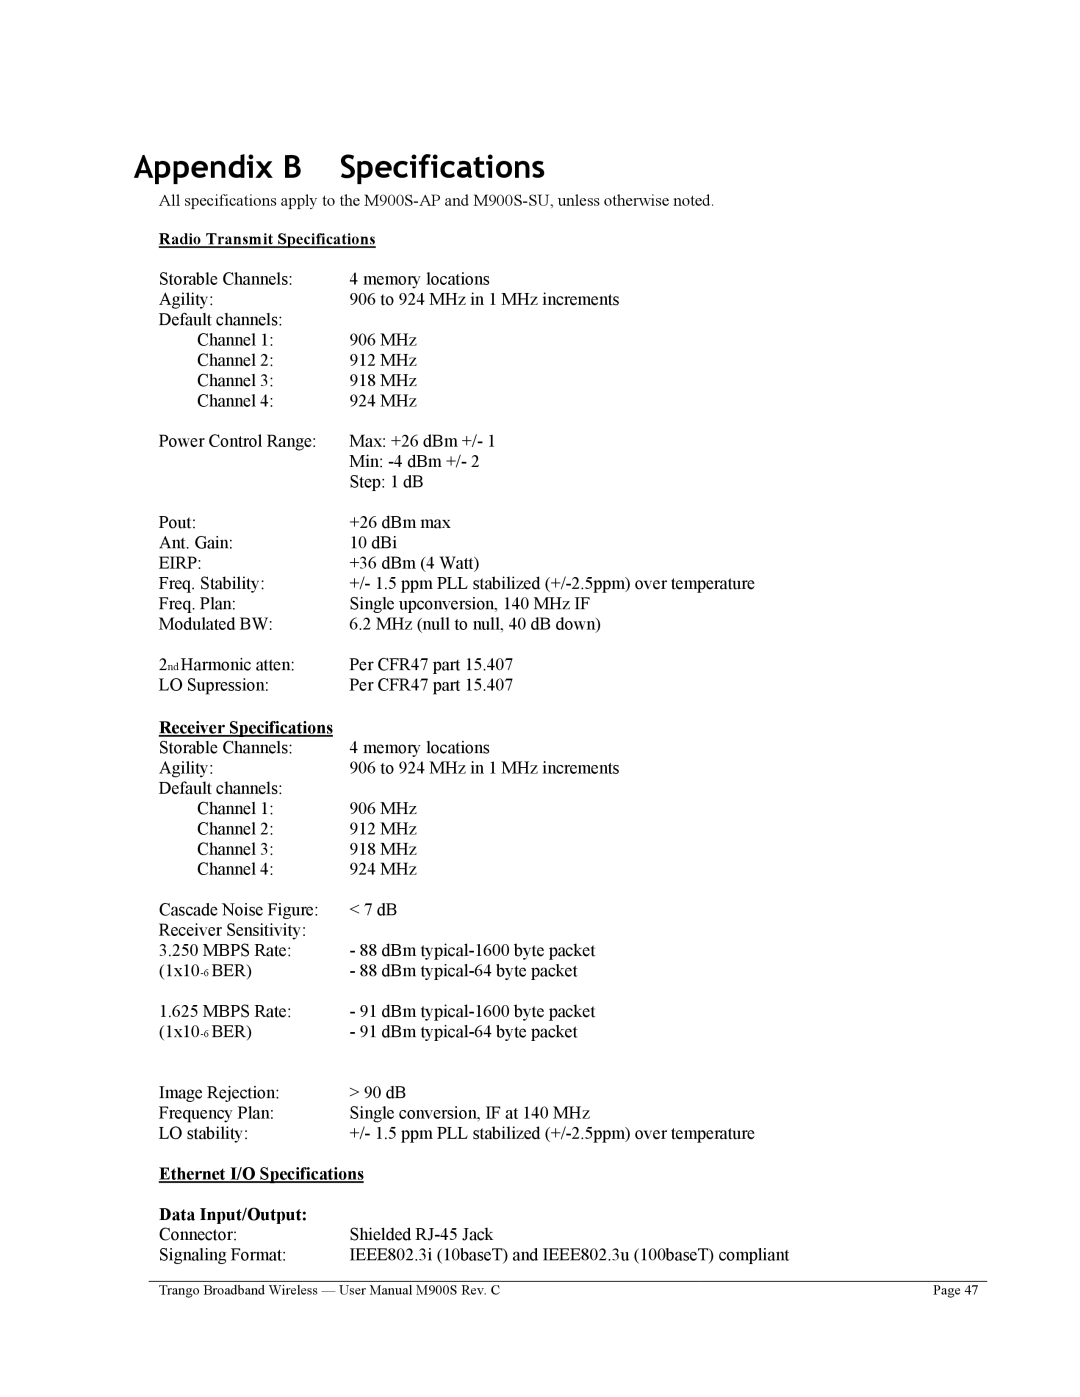 Trango Broadband M900S user manual Appendix B Specifications, Radio Transmit Specifications, Receiver Specifications 